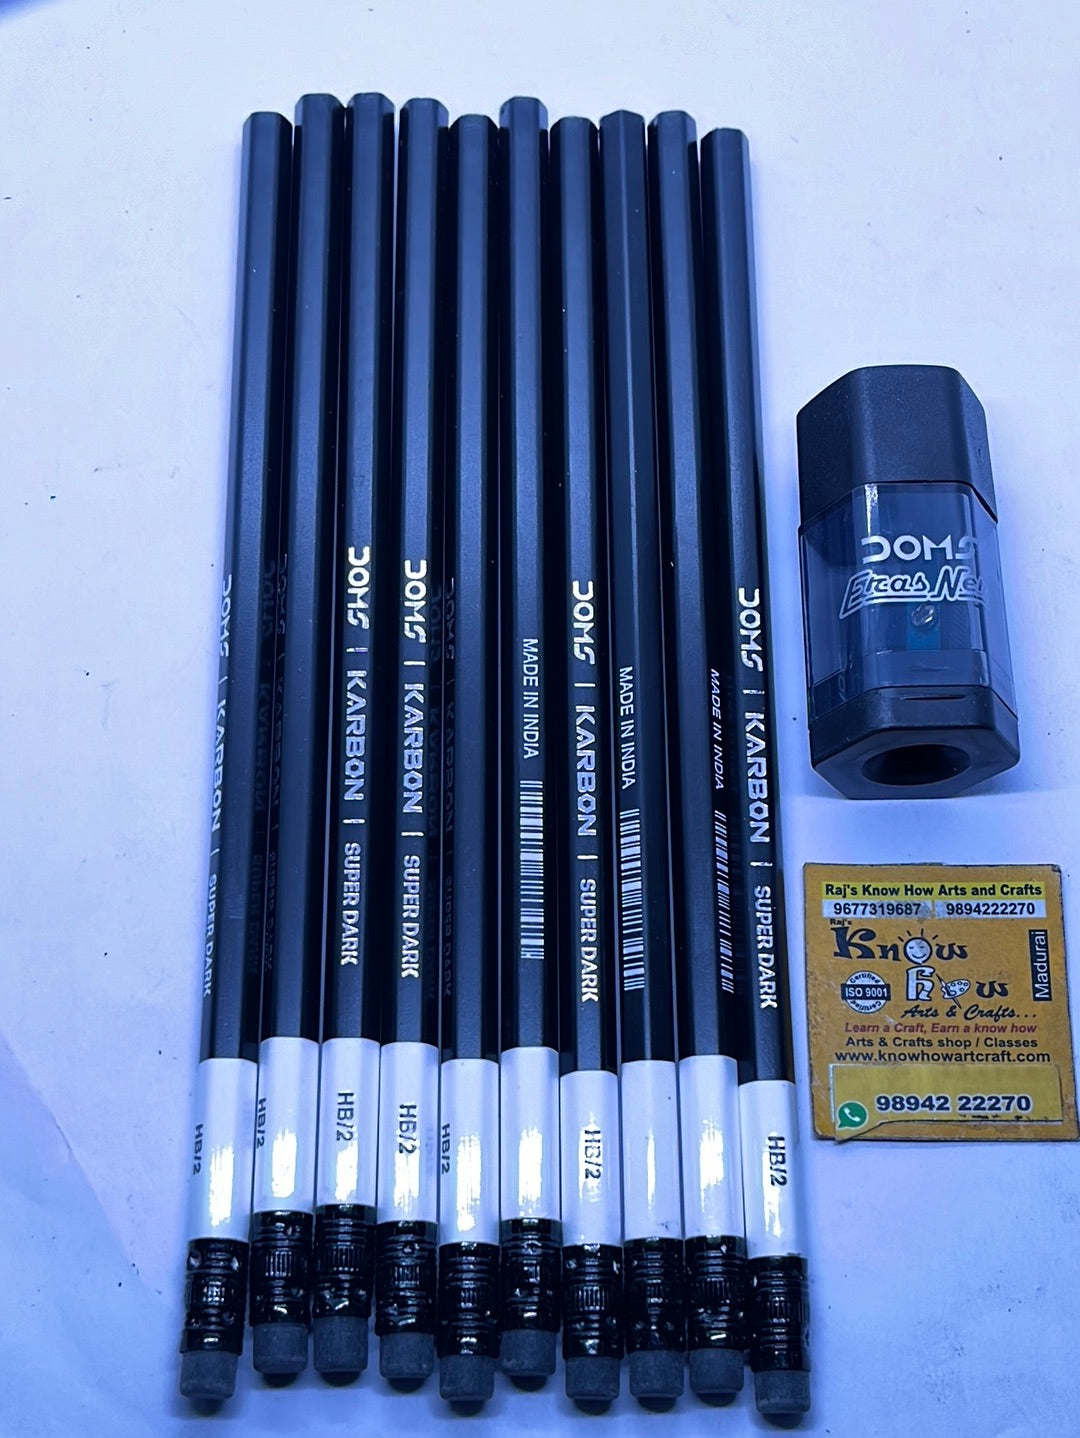 Super dark 10HB/2 graphite Doms 10 pencils + 1 Eraser free